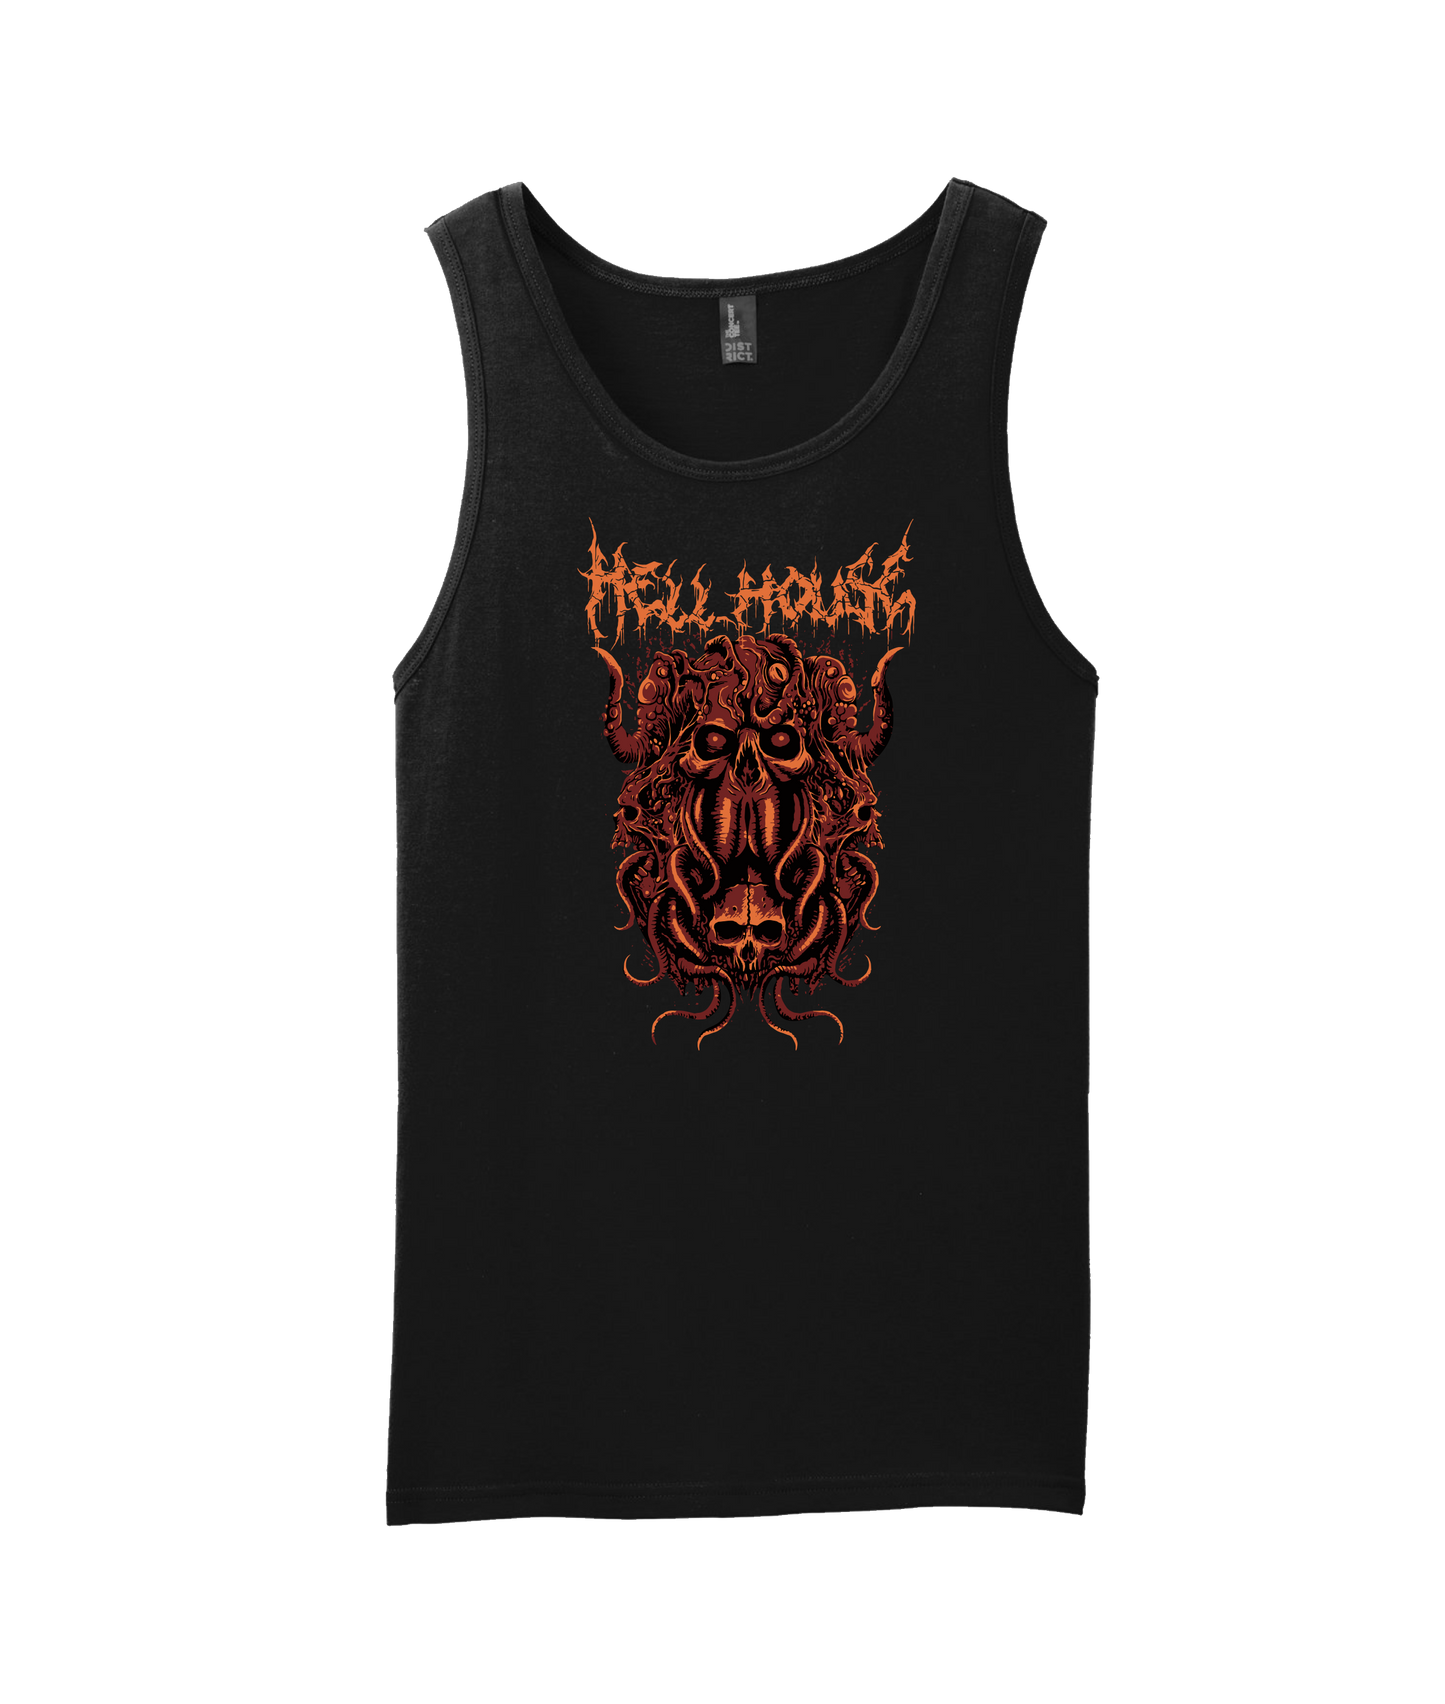 Hellhouse crypt - OCTOPUSSSKVLL - Black Tank Top